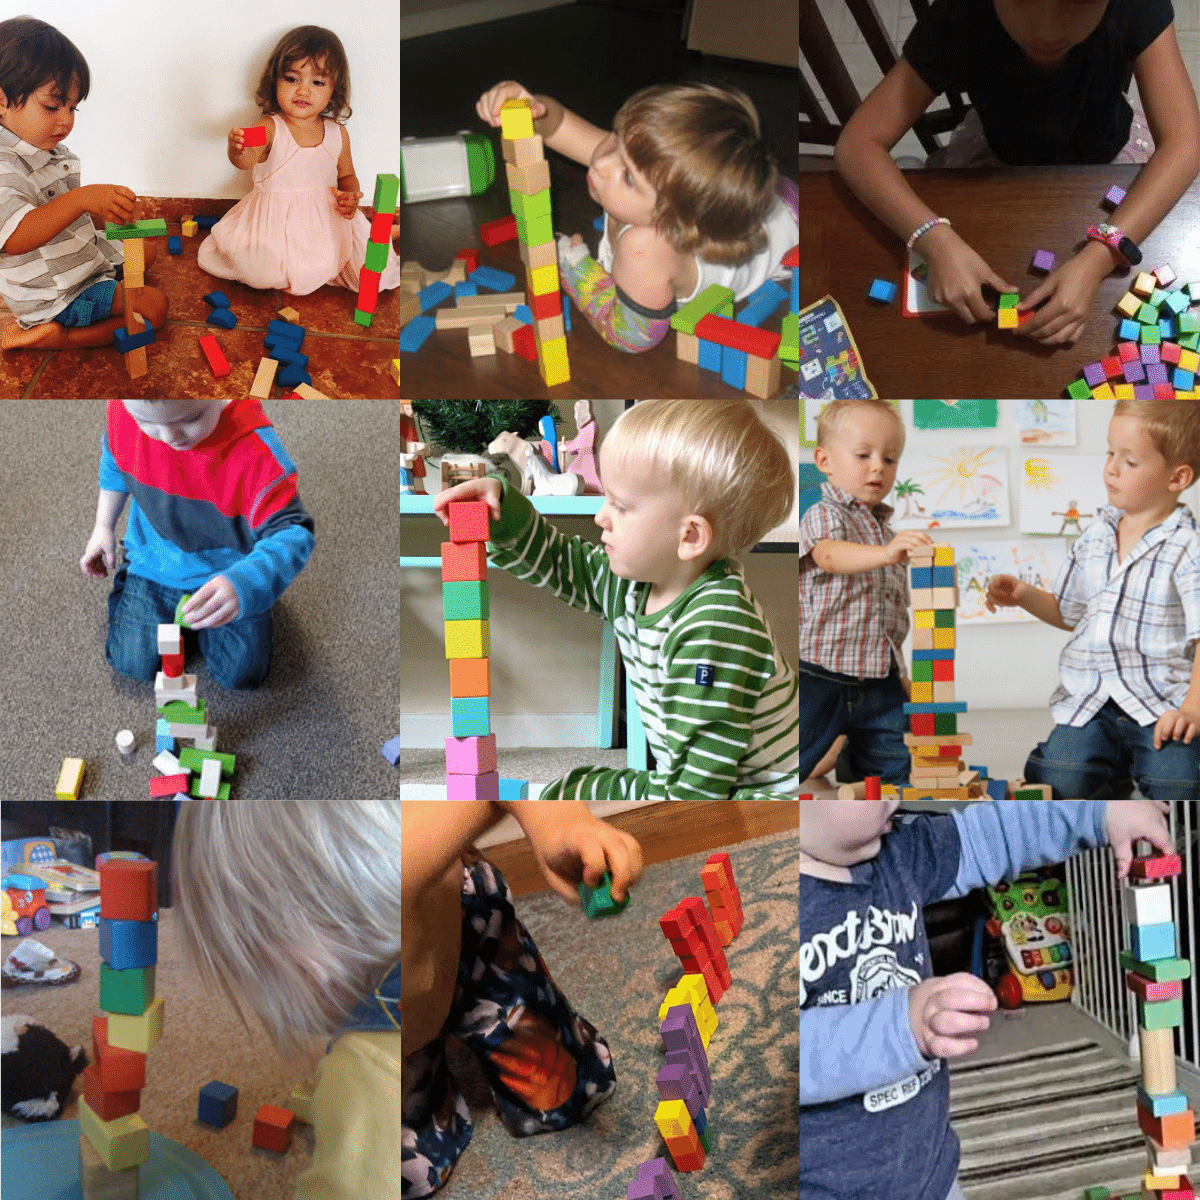 Educational Math Rainbow Stacking Blocks Toy - 🎉 50% OFF TODAY - Skaldo & Malin